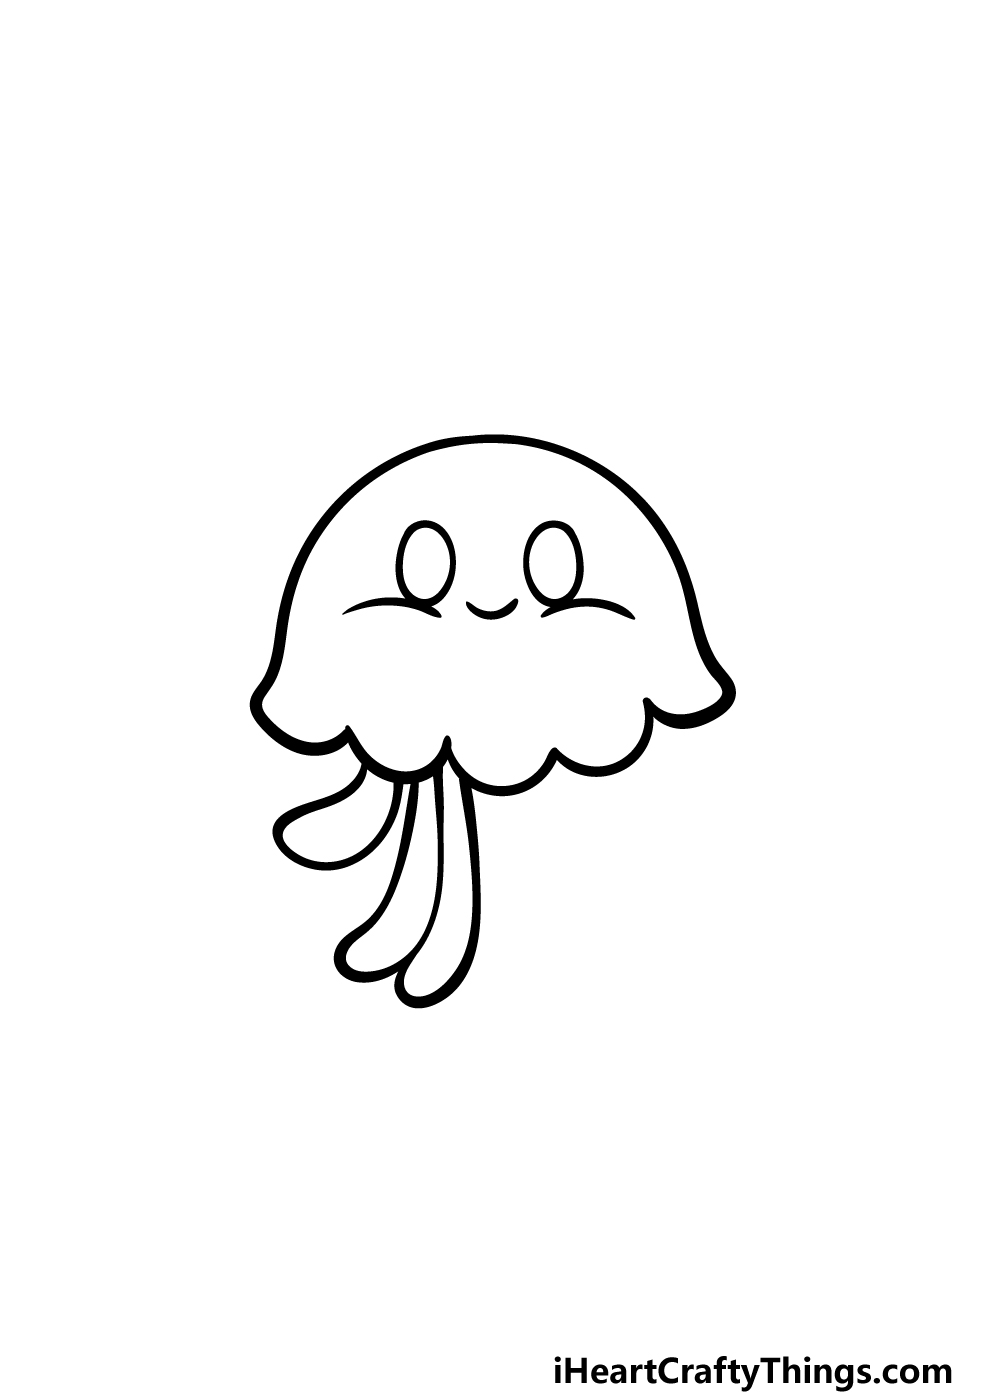 How to Draw A Cartoon Jellyfish step 4